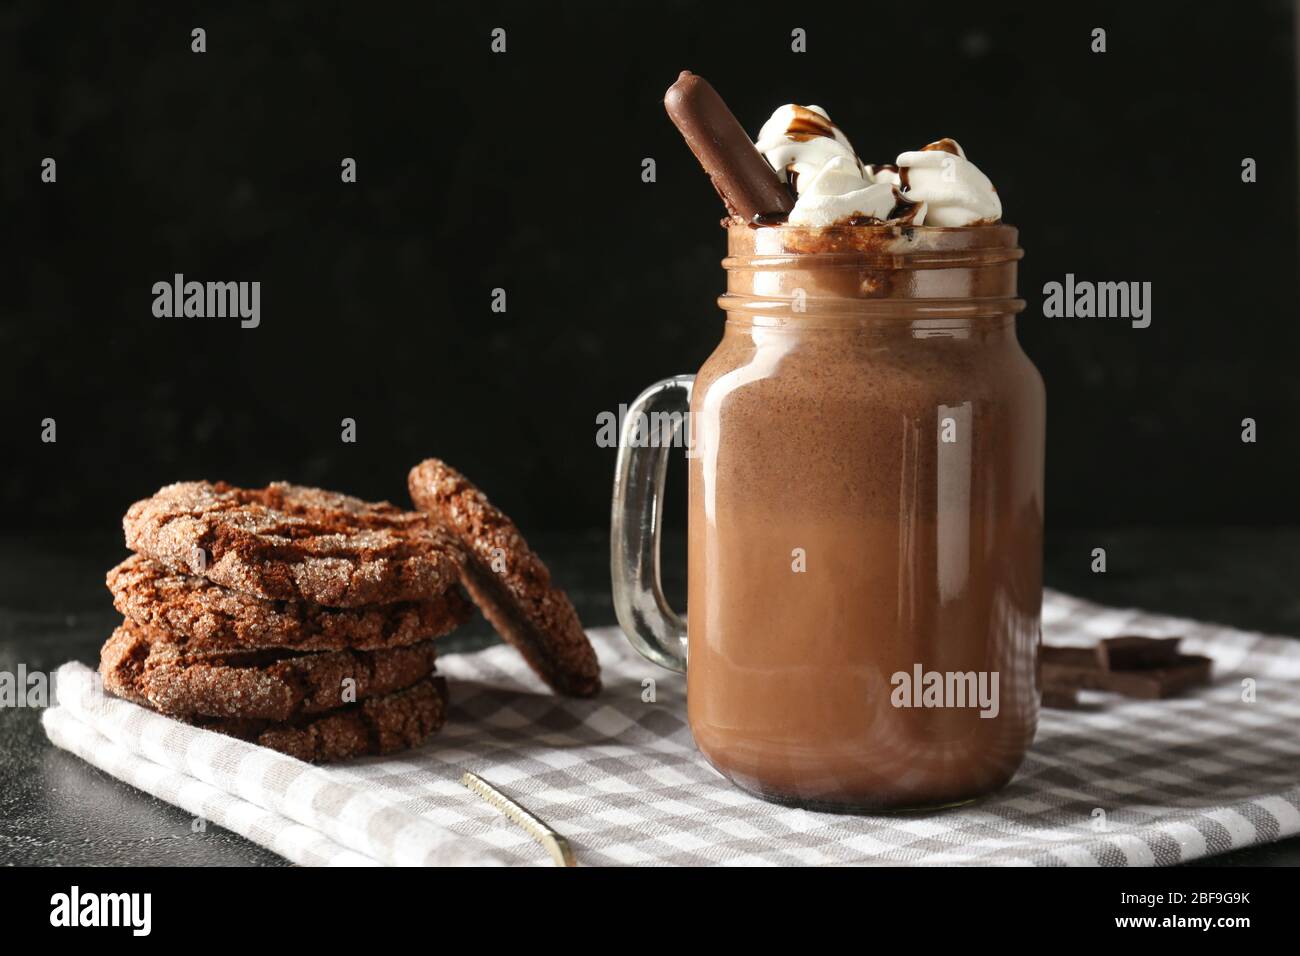 Tarro de chocolate caliente con galletas sobre fondo oscuro Foto de stock